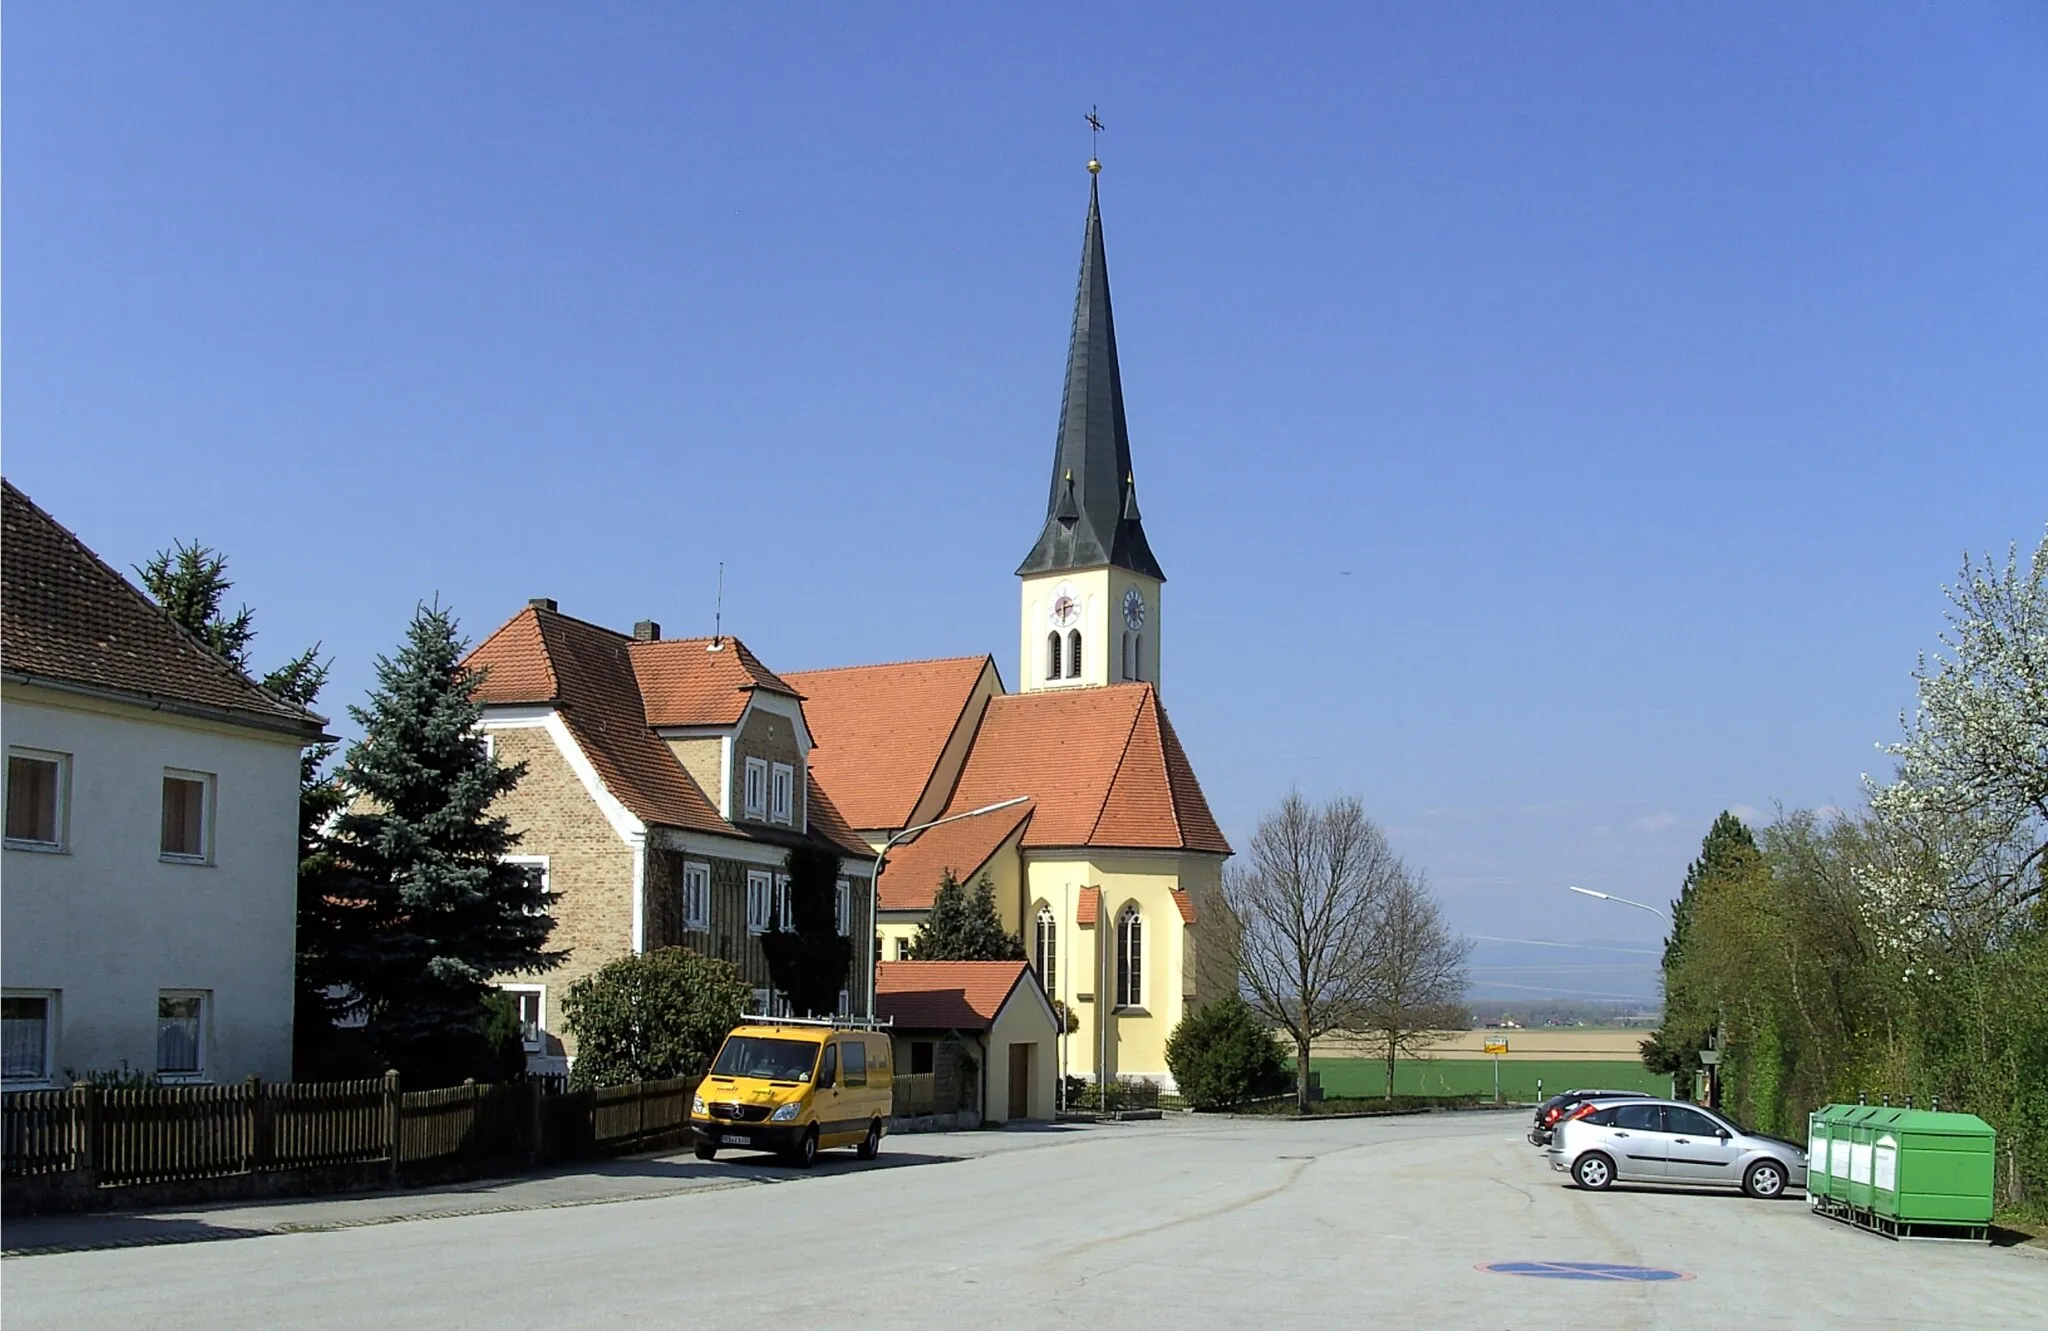 Photo showing: Village of Wallerdorf near Künzing in Bavaria, Germany.